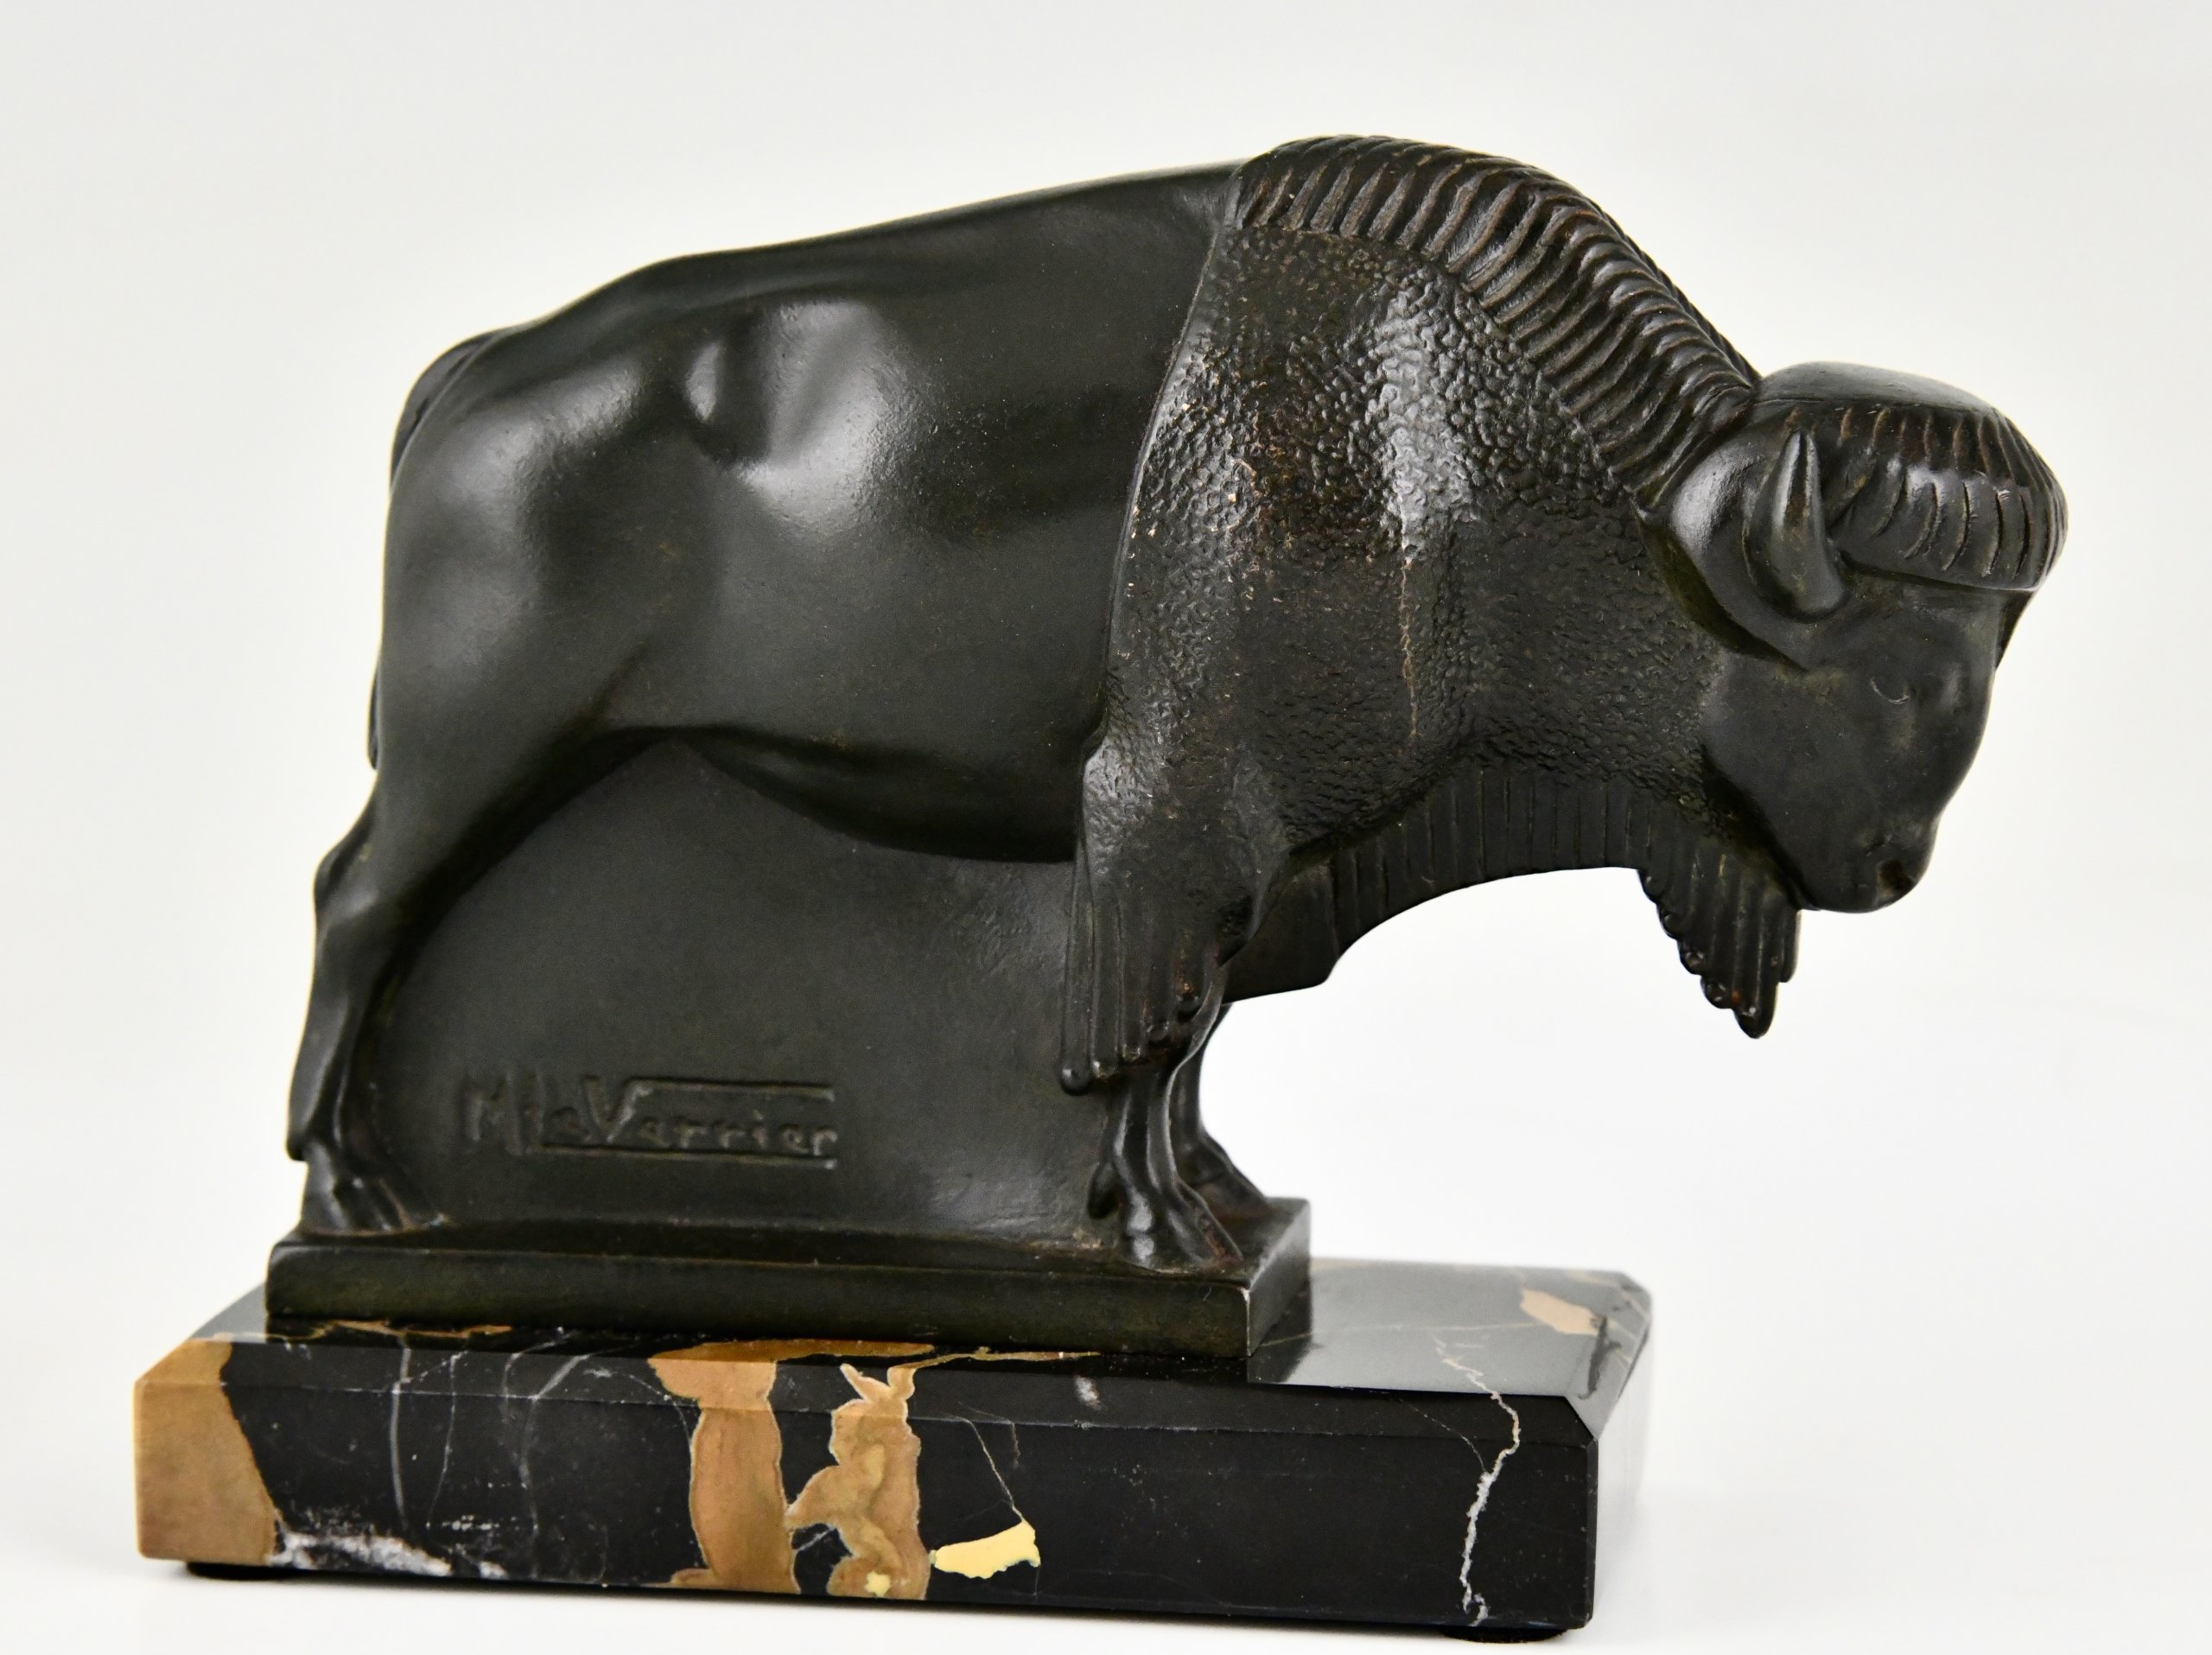 Art Deco bison bookends